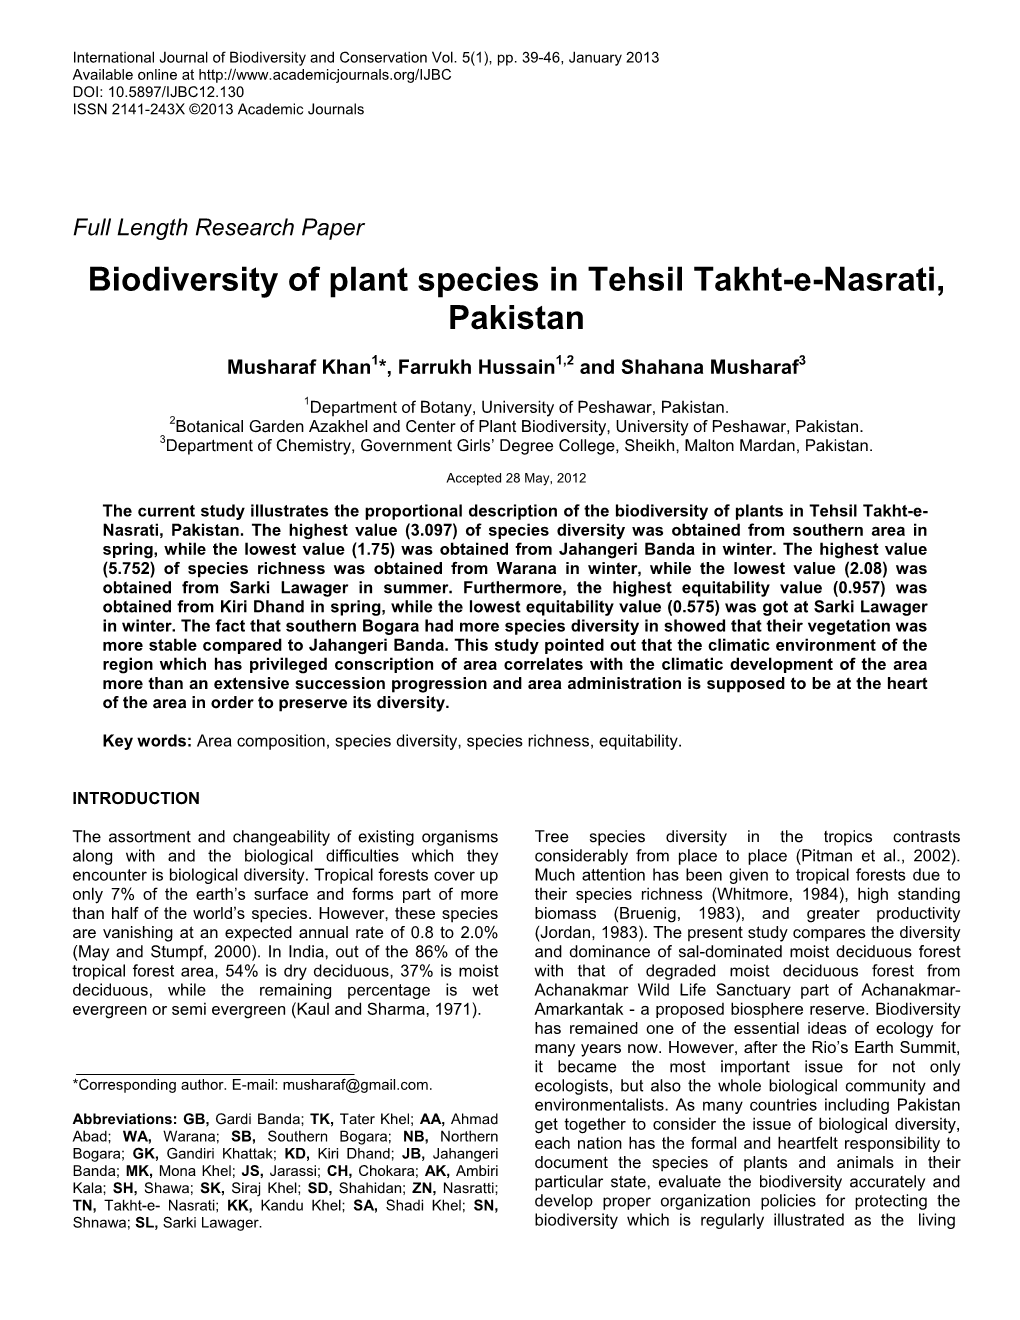 Biodiversity of Plant Species in Tehsil Takht-E-Nasrati, Pakistan